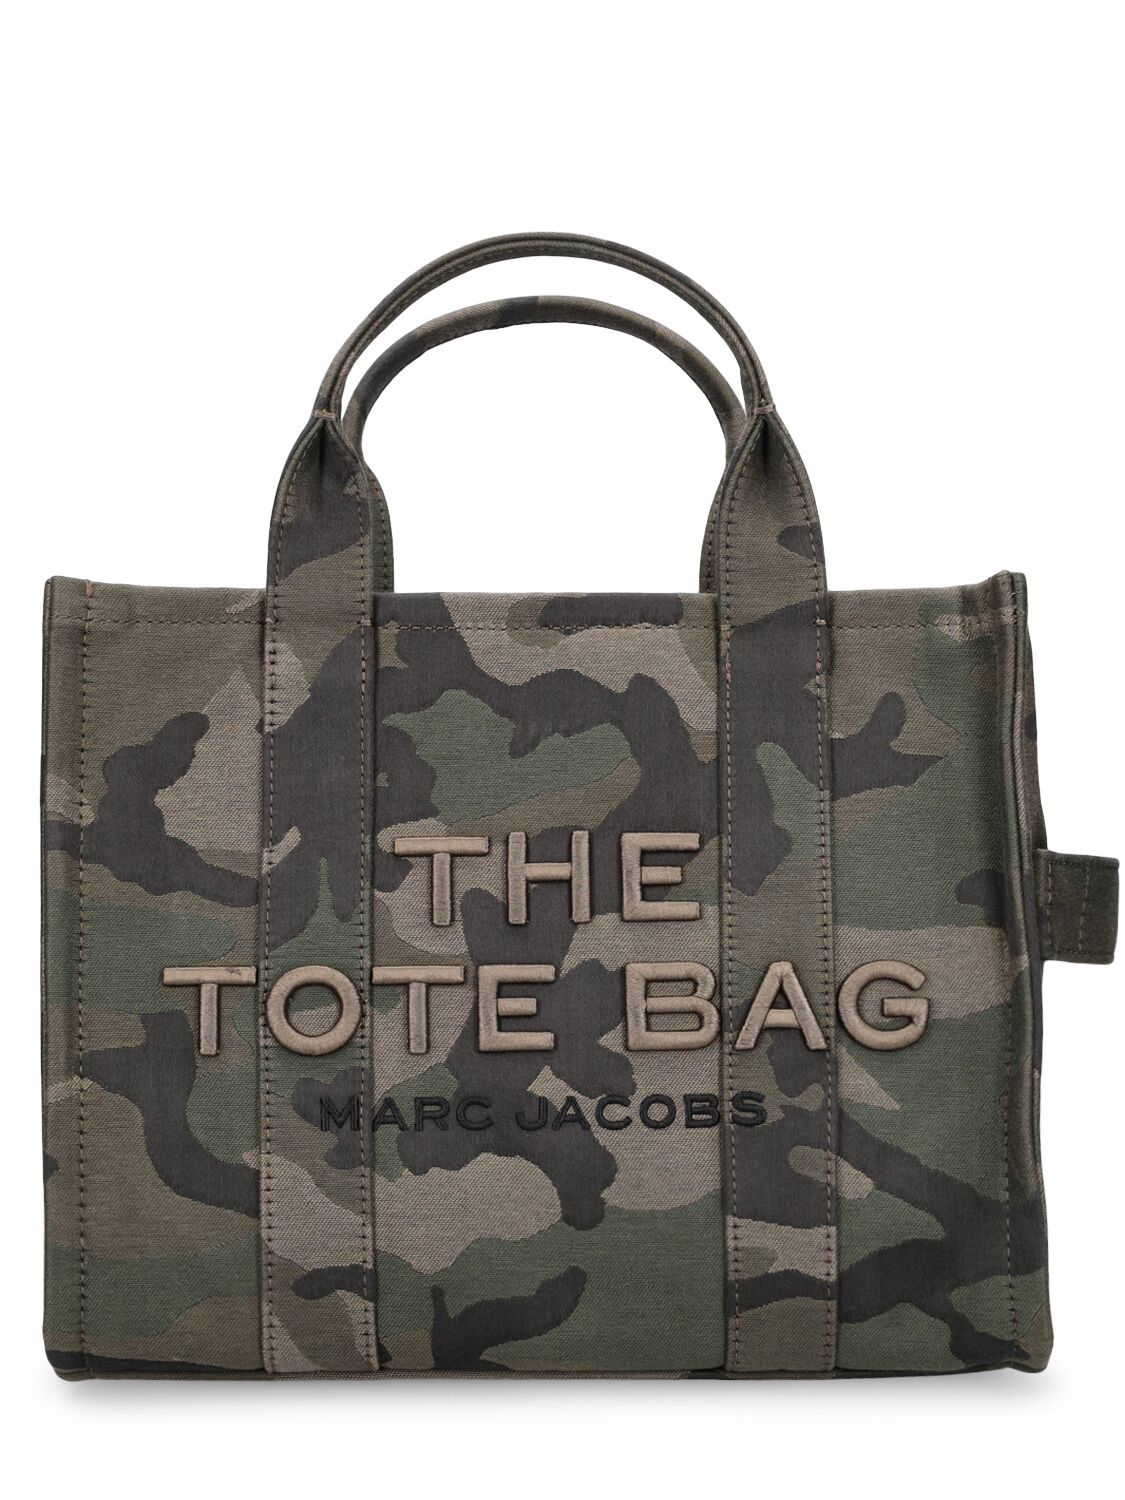 The Medium Tote Denim Bag